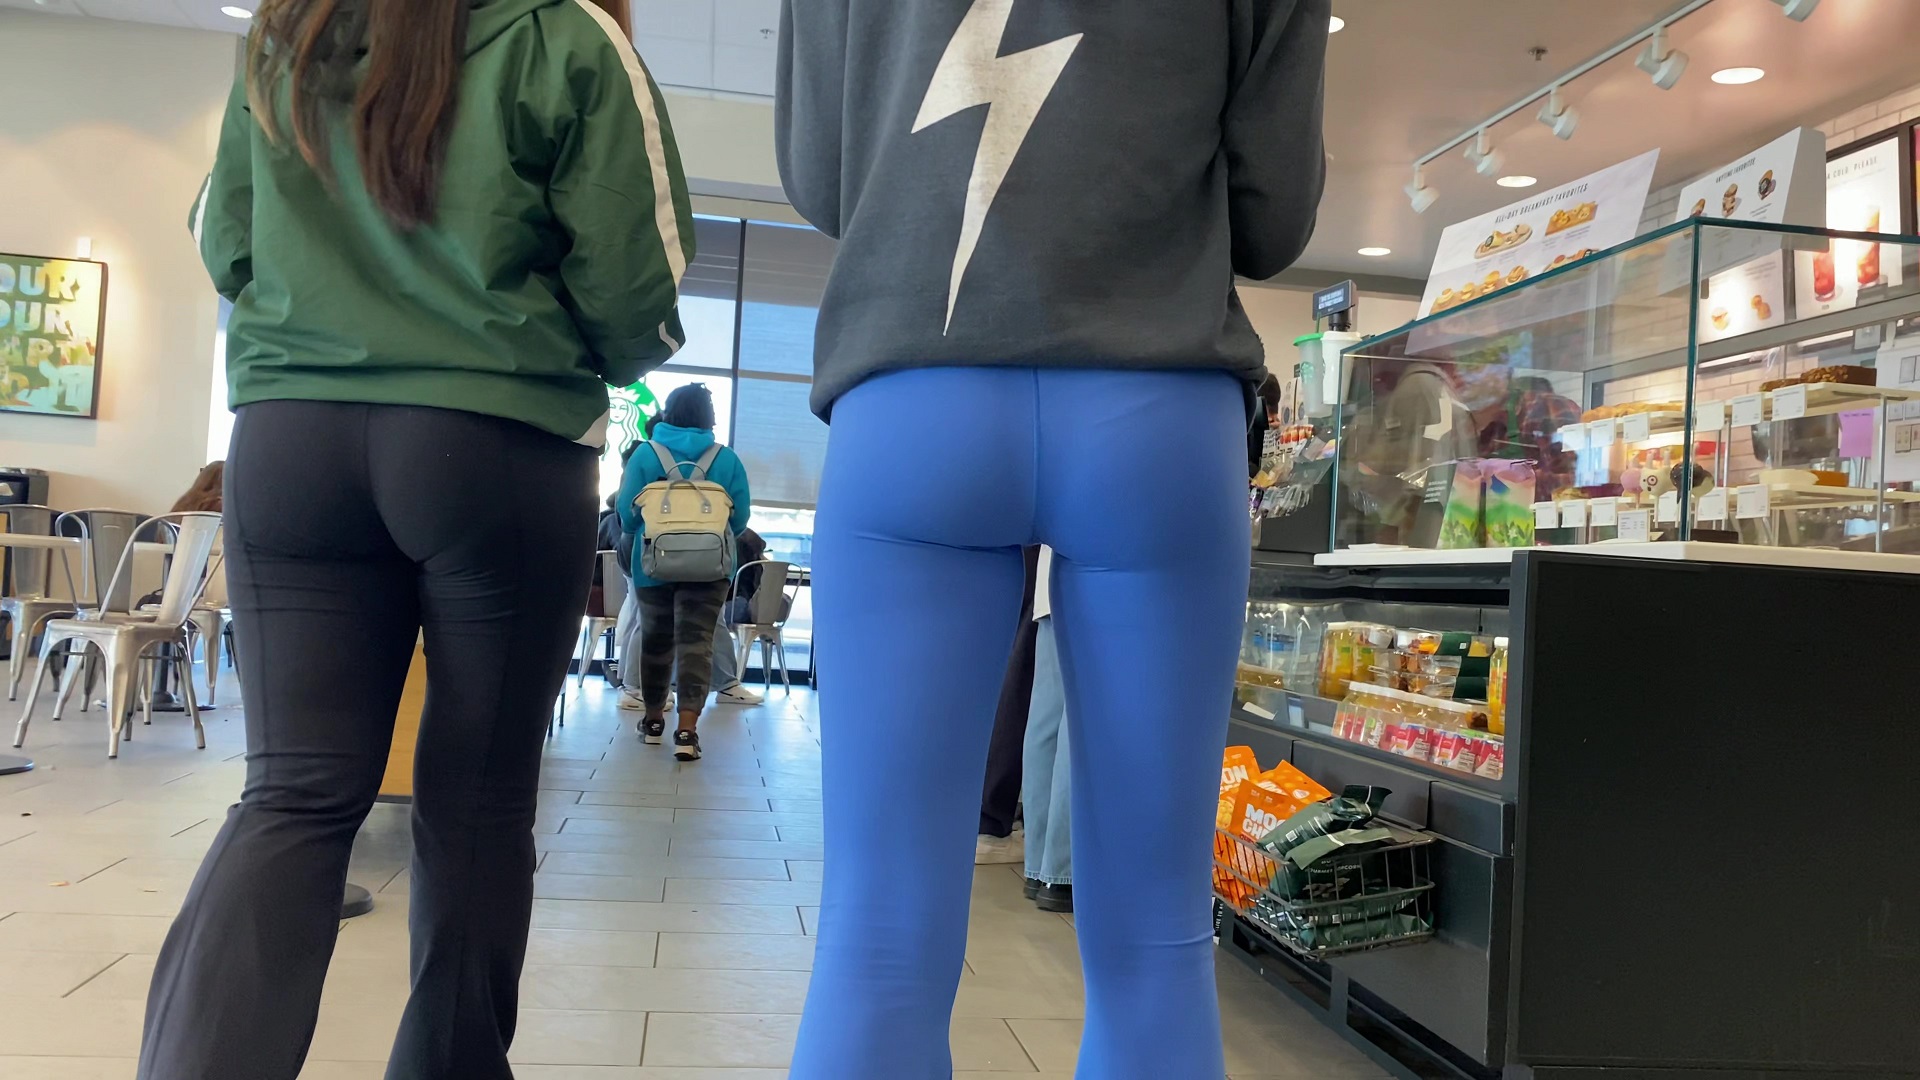 Fapwall on X: Blue Yoga Pants On Off💙 (via